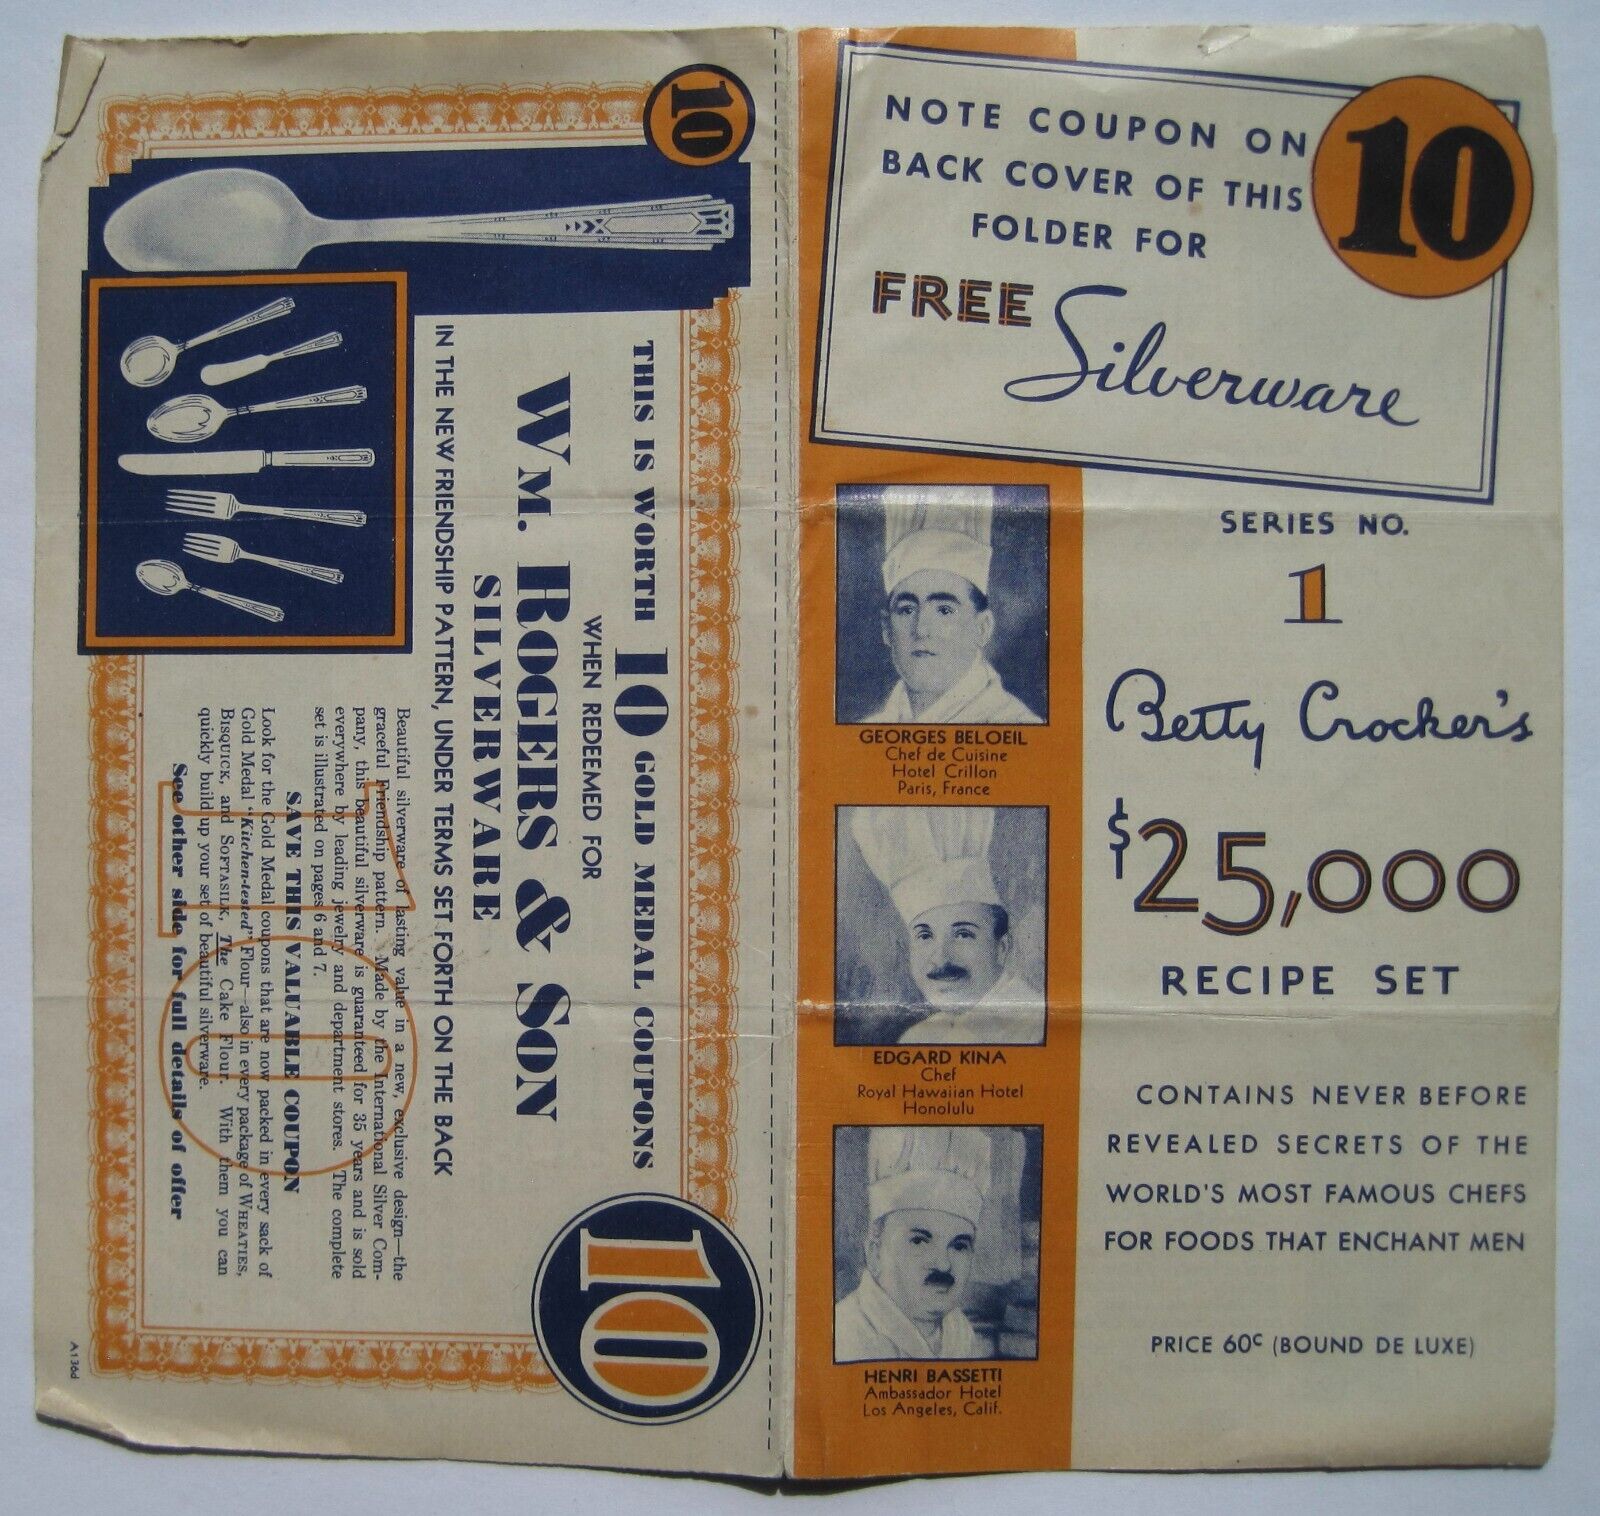 Betty Crocker\'s $25,000 Recipe Set; Series No. 1; Pamphlet of Secrets; Coupon